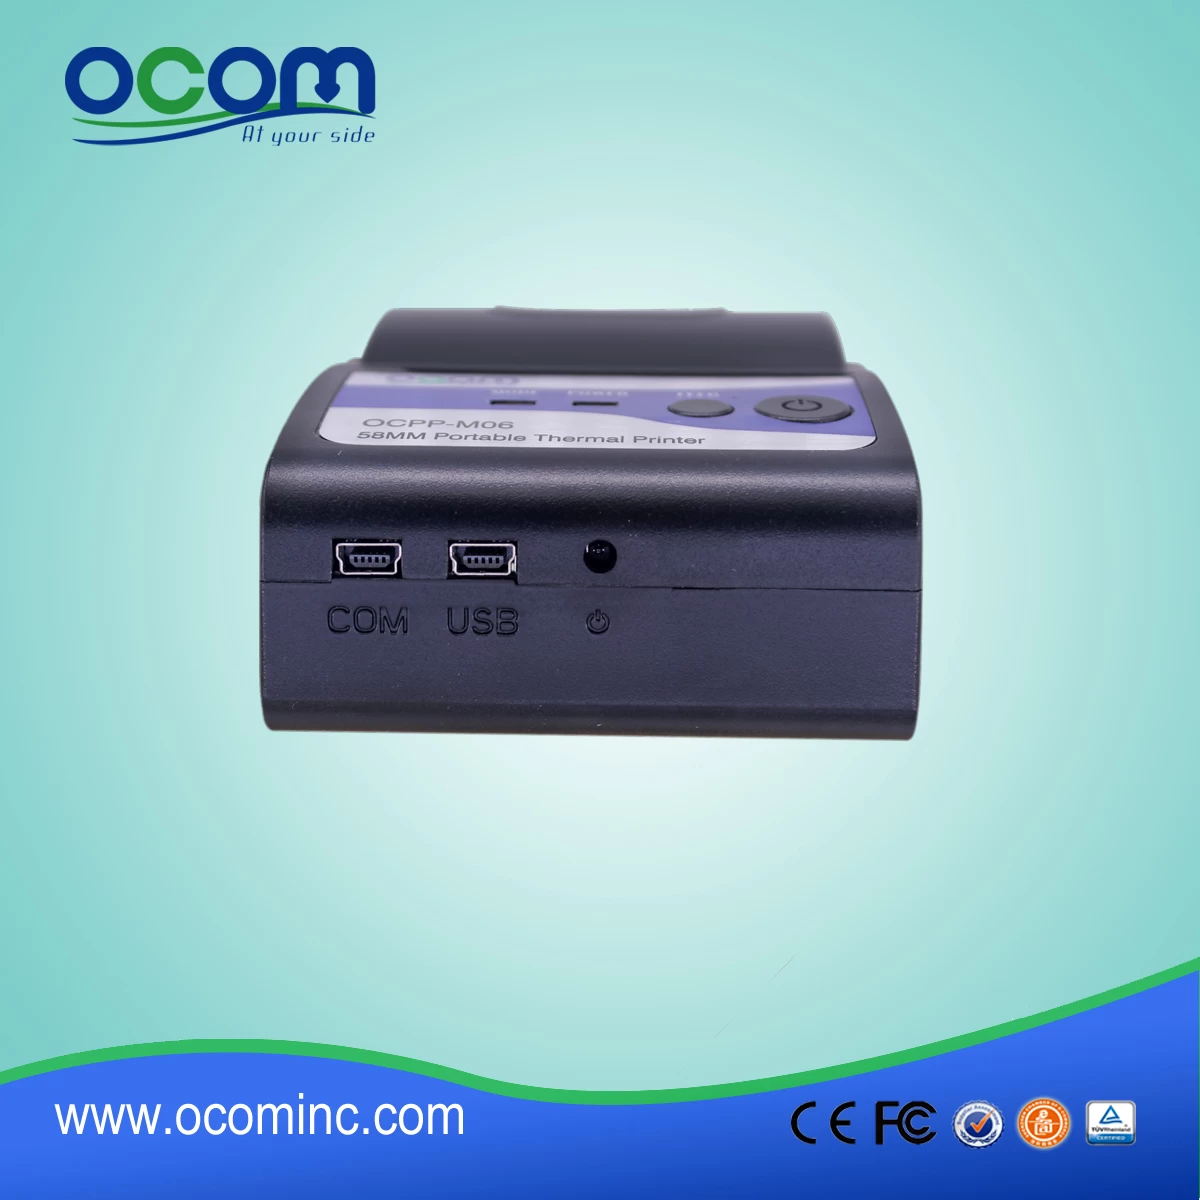 OCPP-M06 Portable Wireless Mobile Thermal Receipt Printer